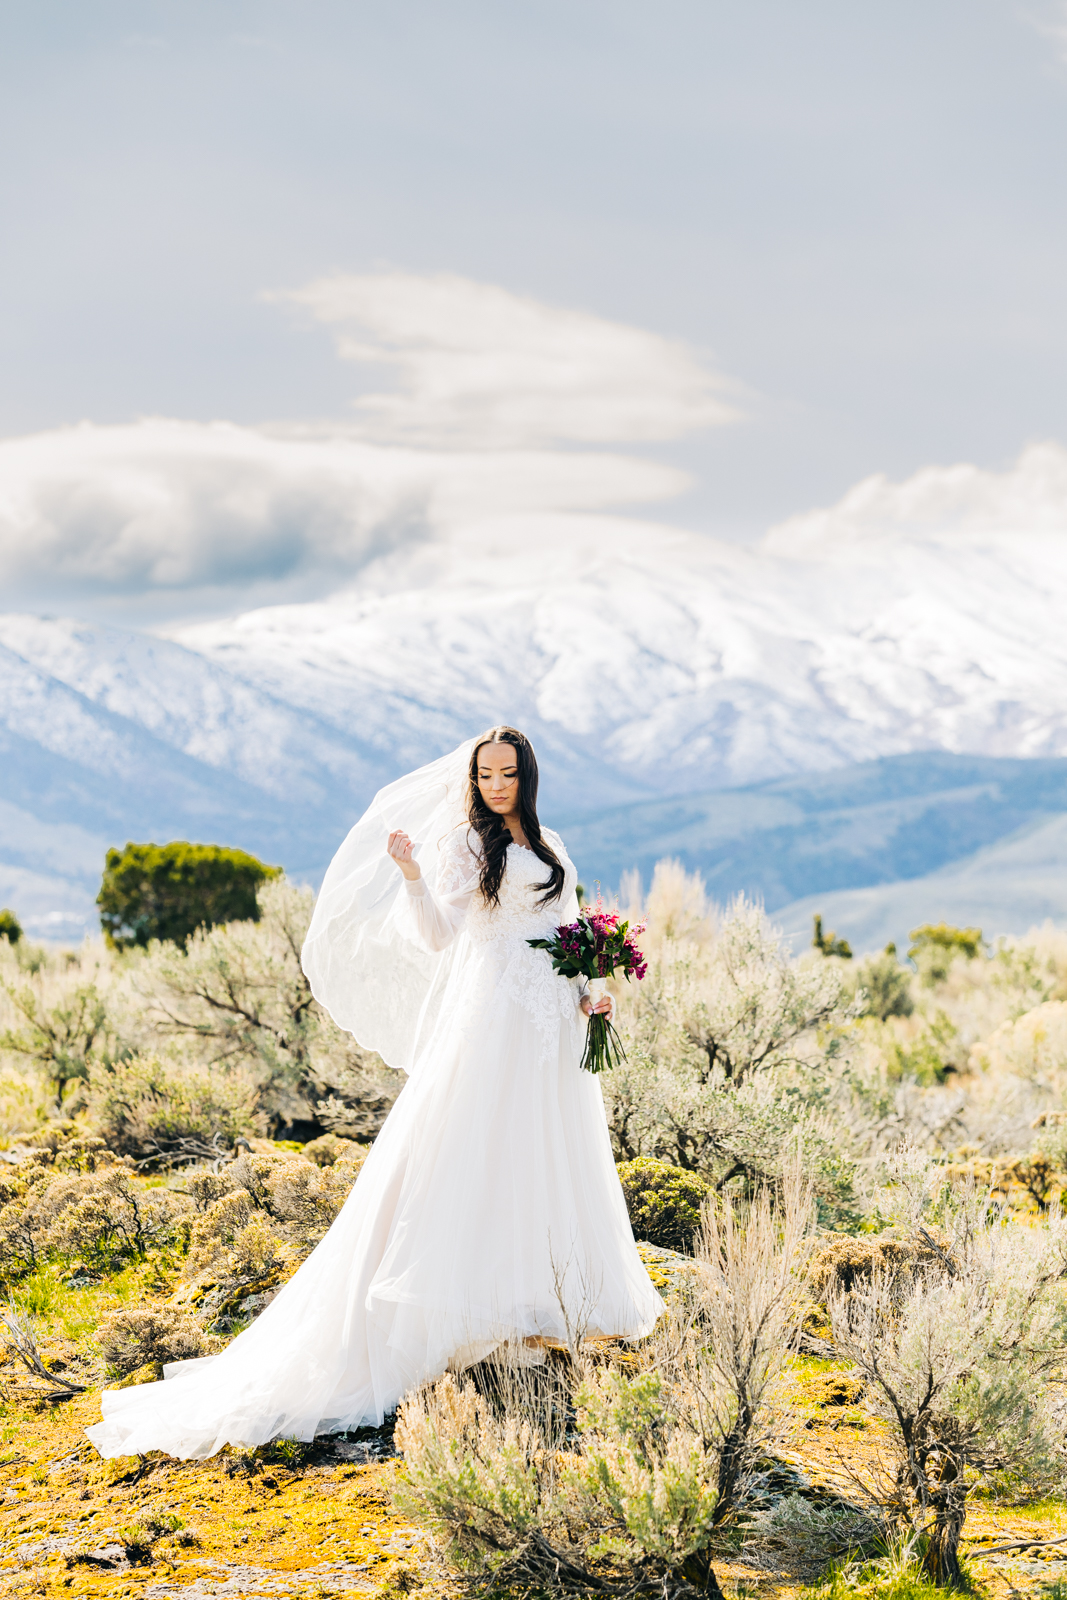 Jackson Hole wedding photographer captures wind picking up brides veil in pocatello mountains